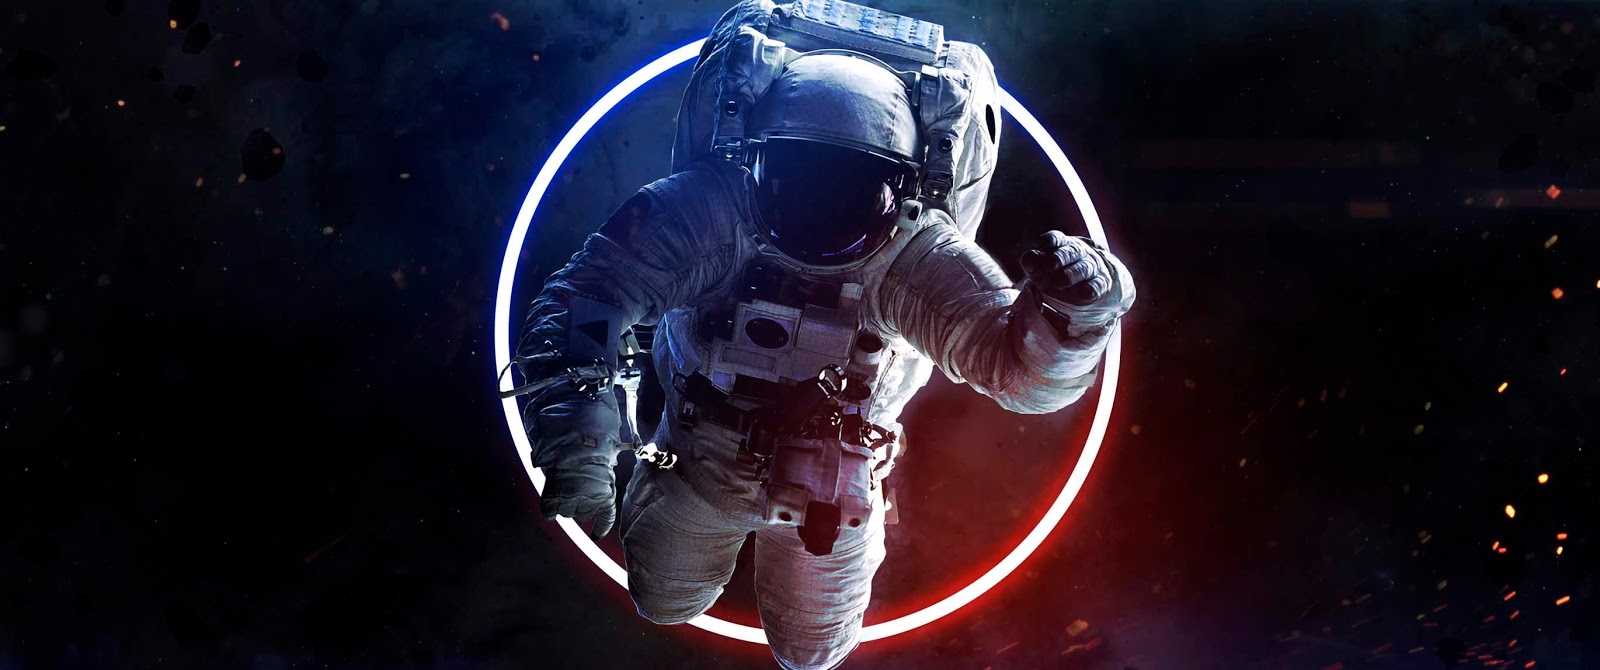 Astronaut Neon Wallpaper HD